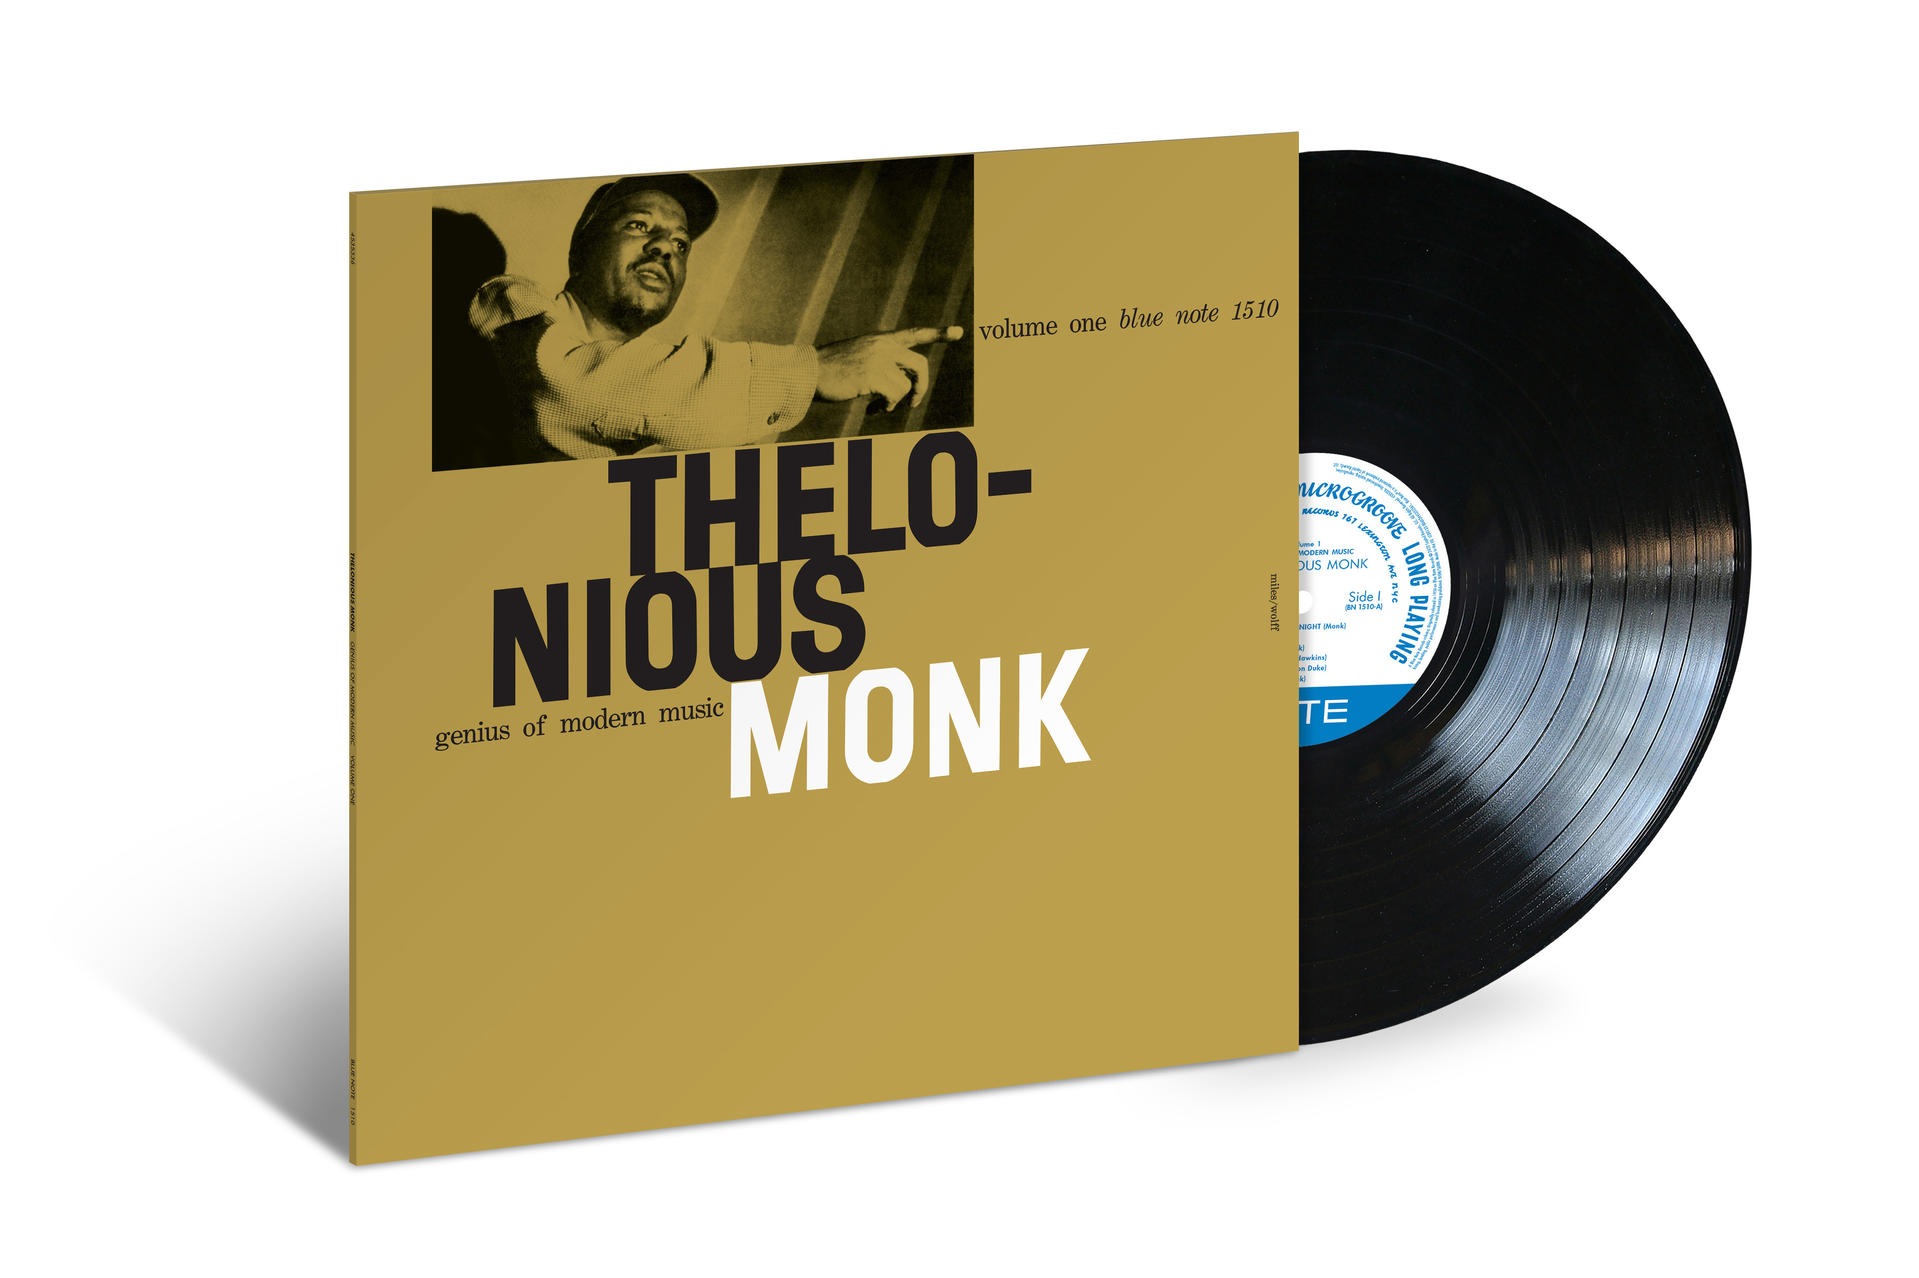 Genius Of - - Music Thelonius Modern (Vinyl) Monk